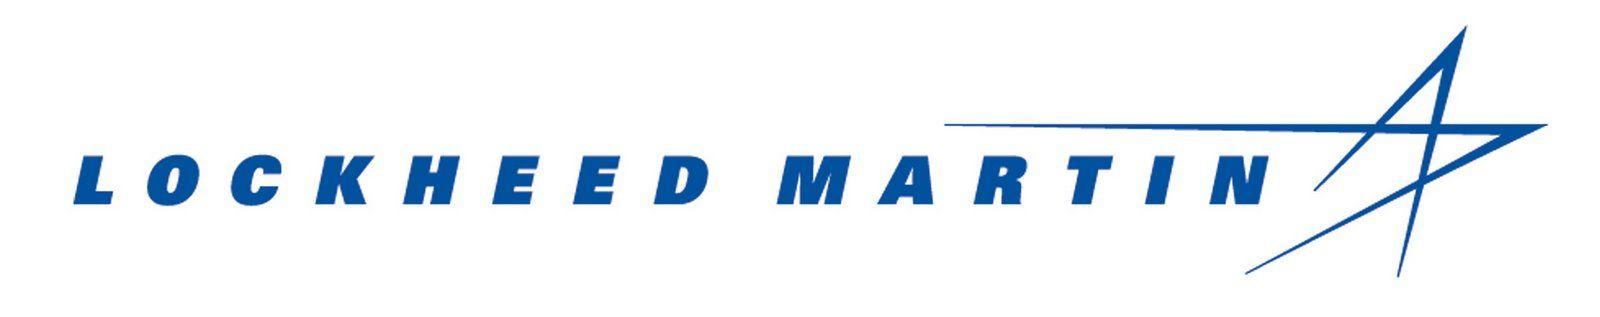 Lockheed Martin Space Logo - Lockheed martin Logos